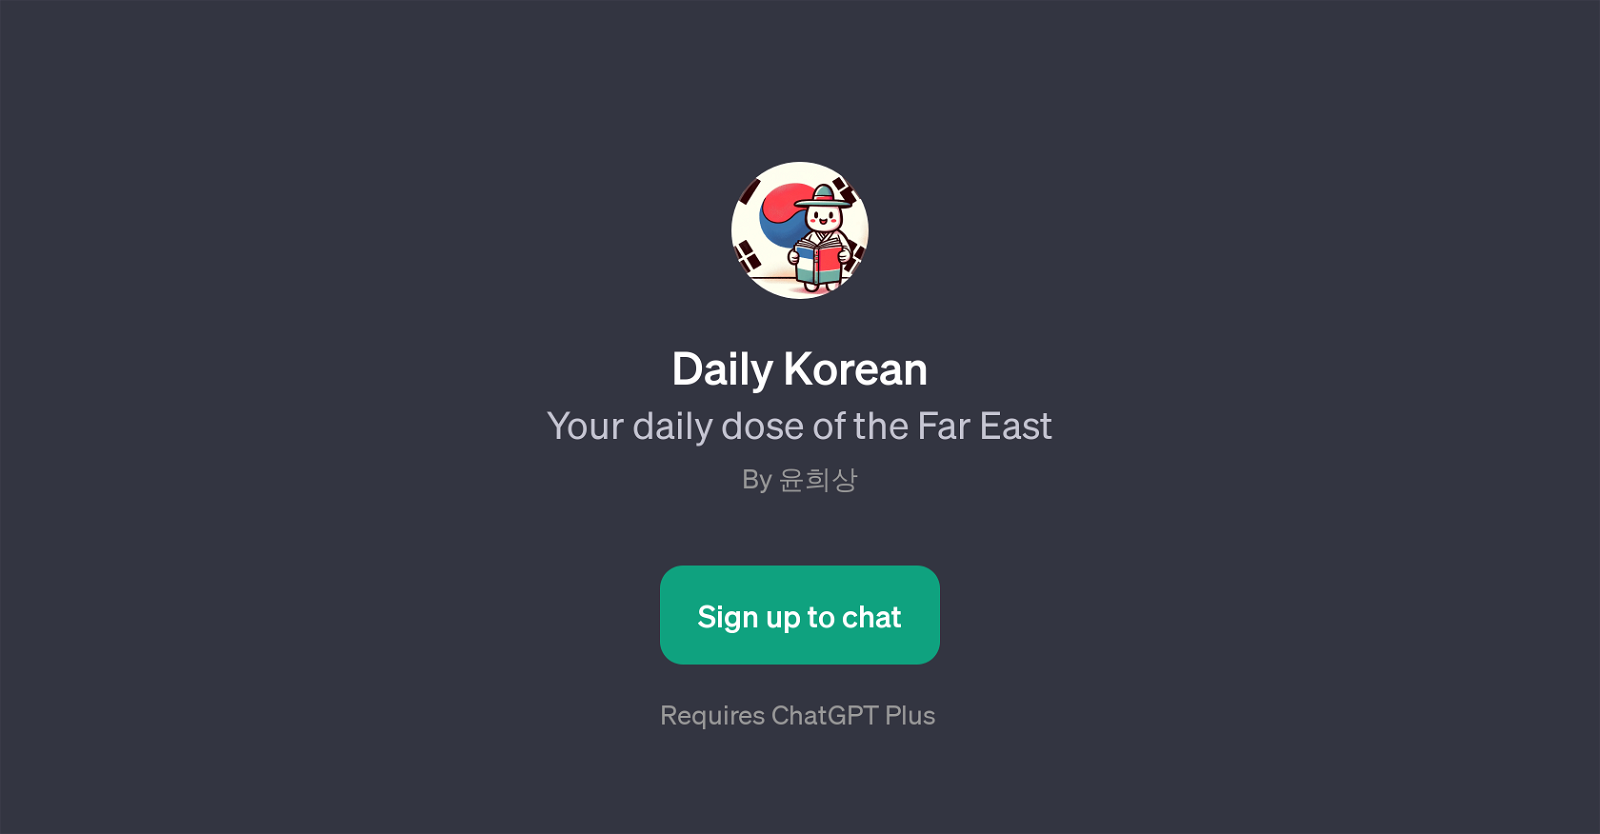 Daily Korean website